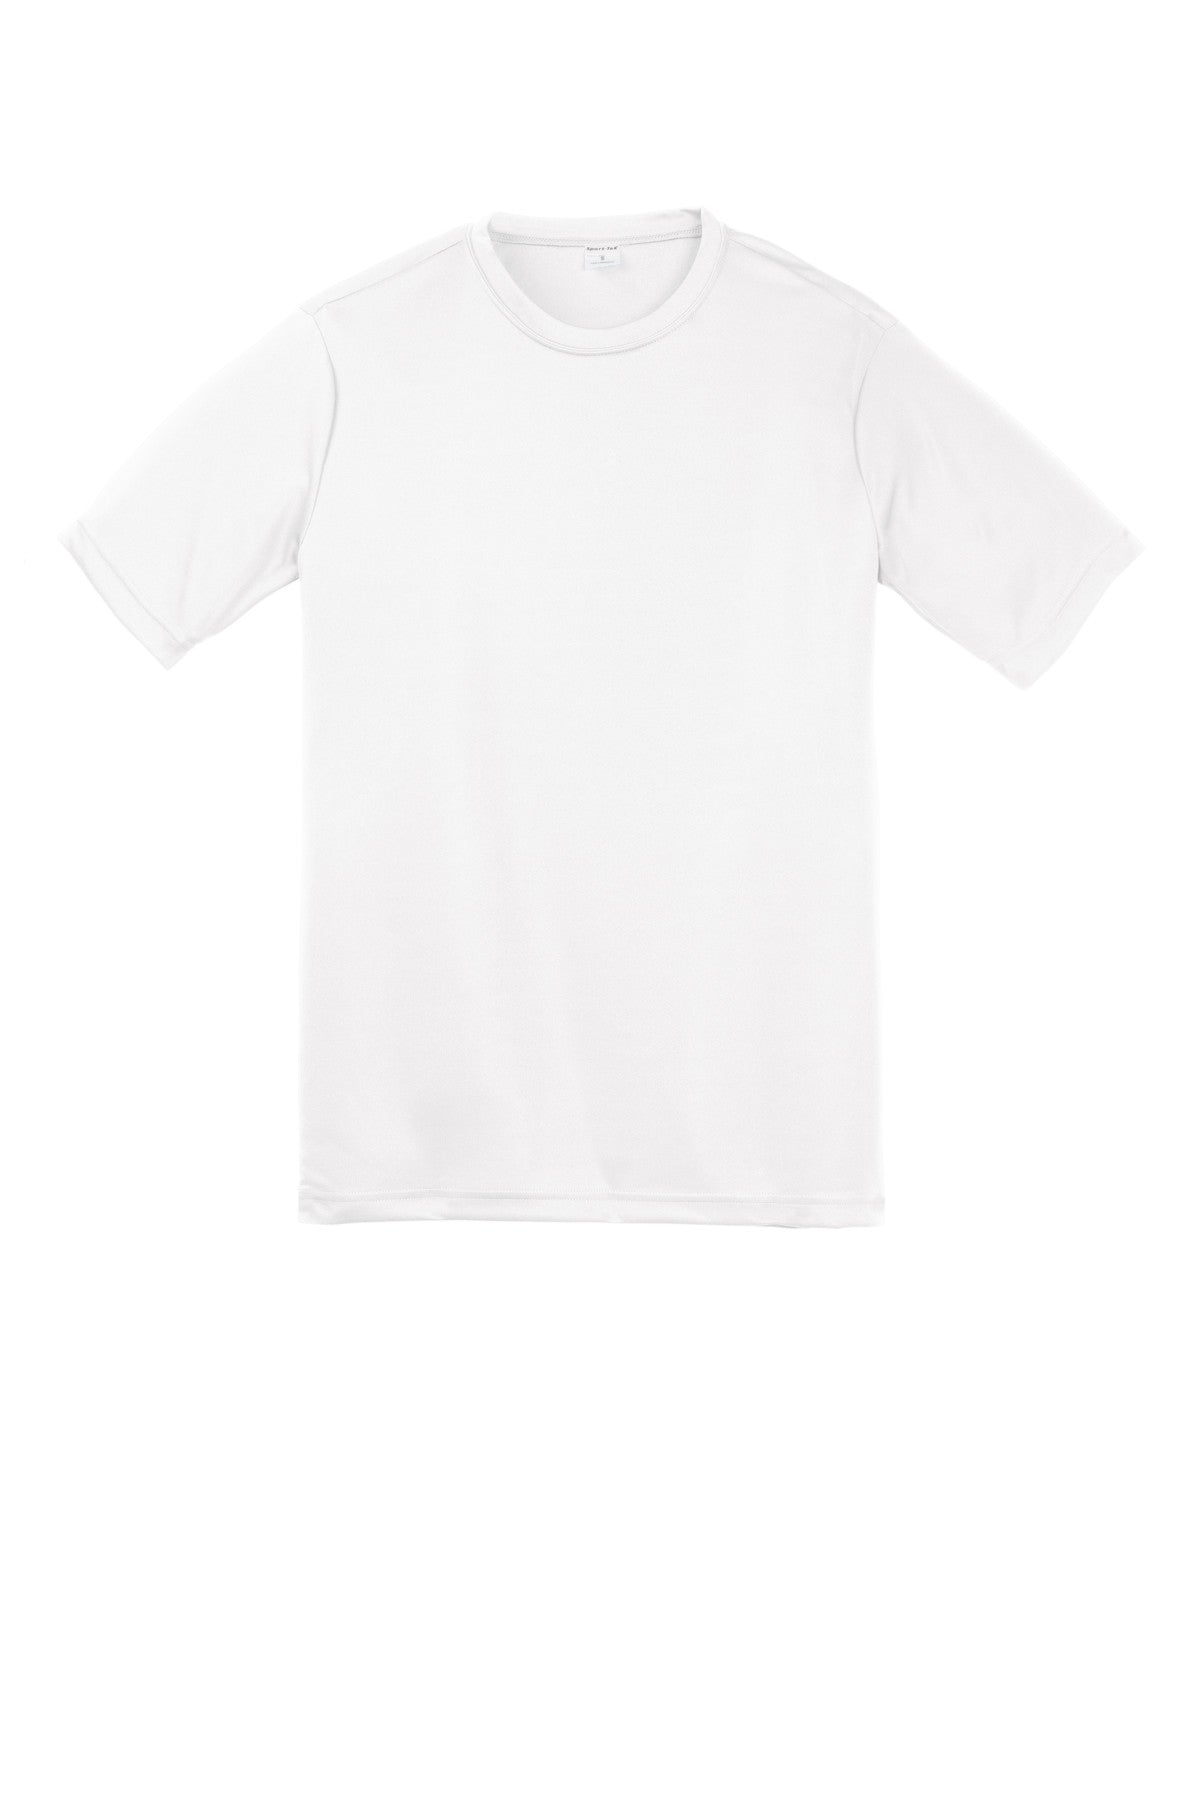 Sport-Tek Yst350 Polyester Youth T-Shirt Yth Small / White